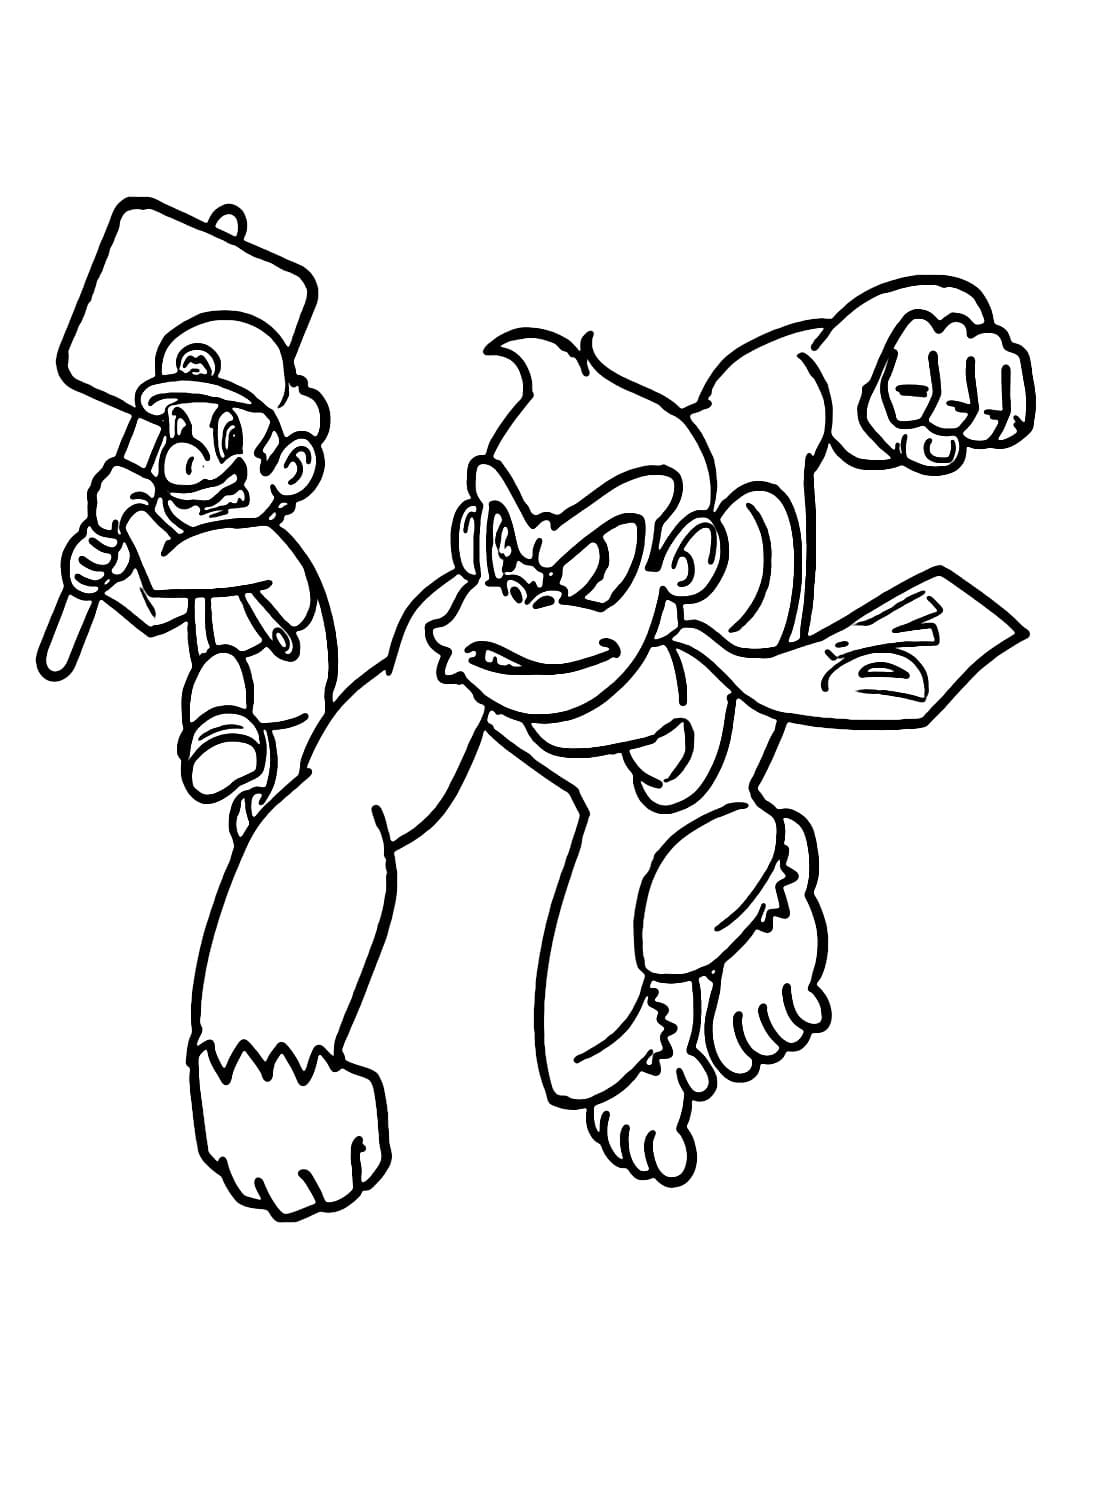 Coloriage Mario contre Donkey Kong